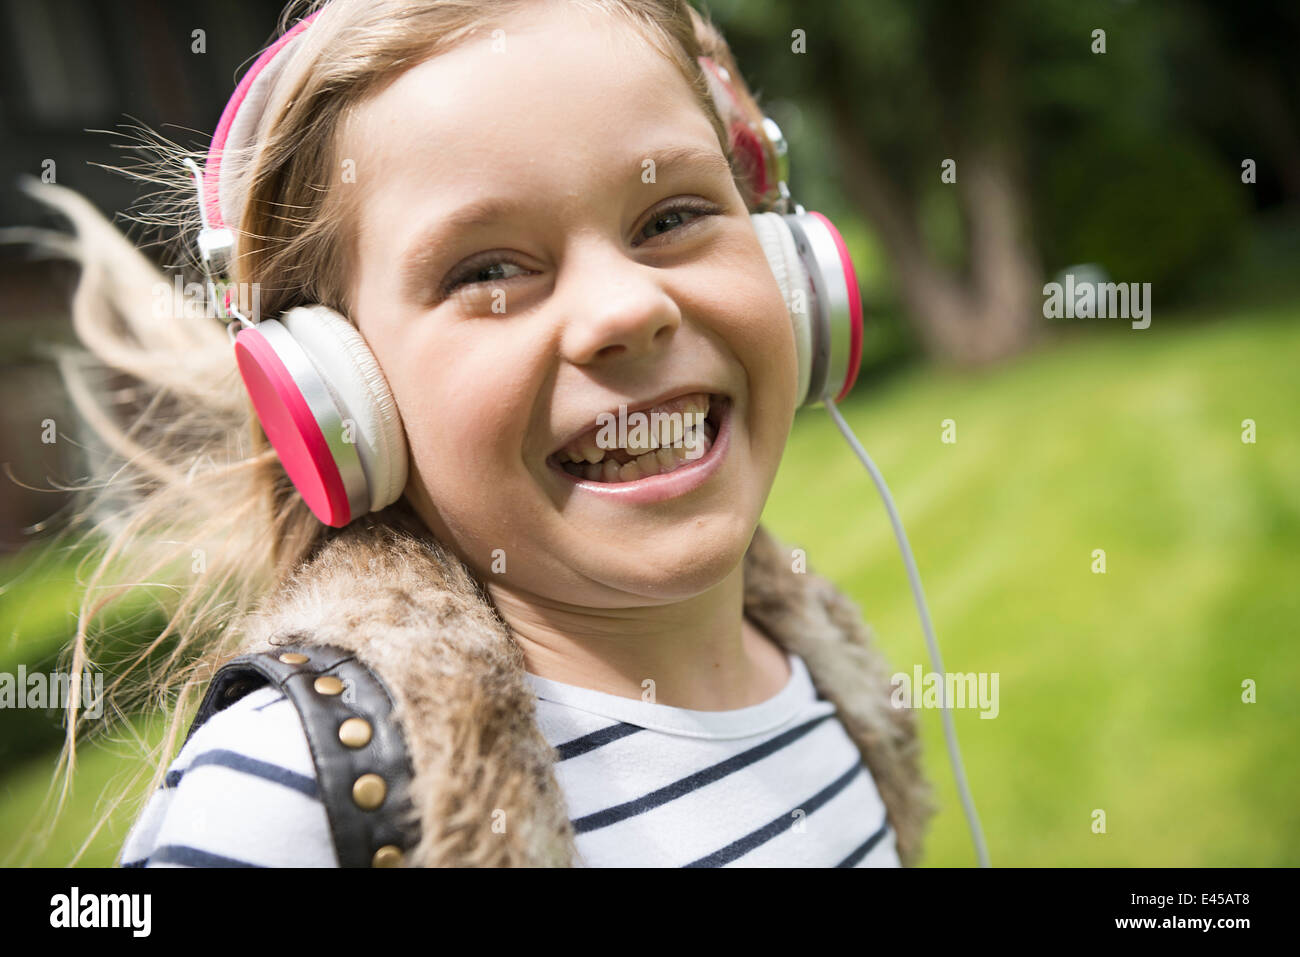 Girl listening to music on headphones Stock Photo